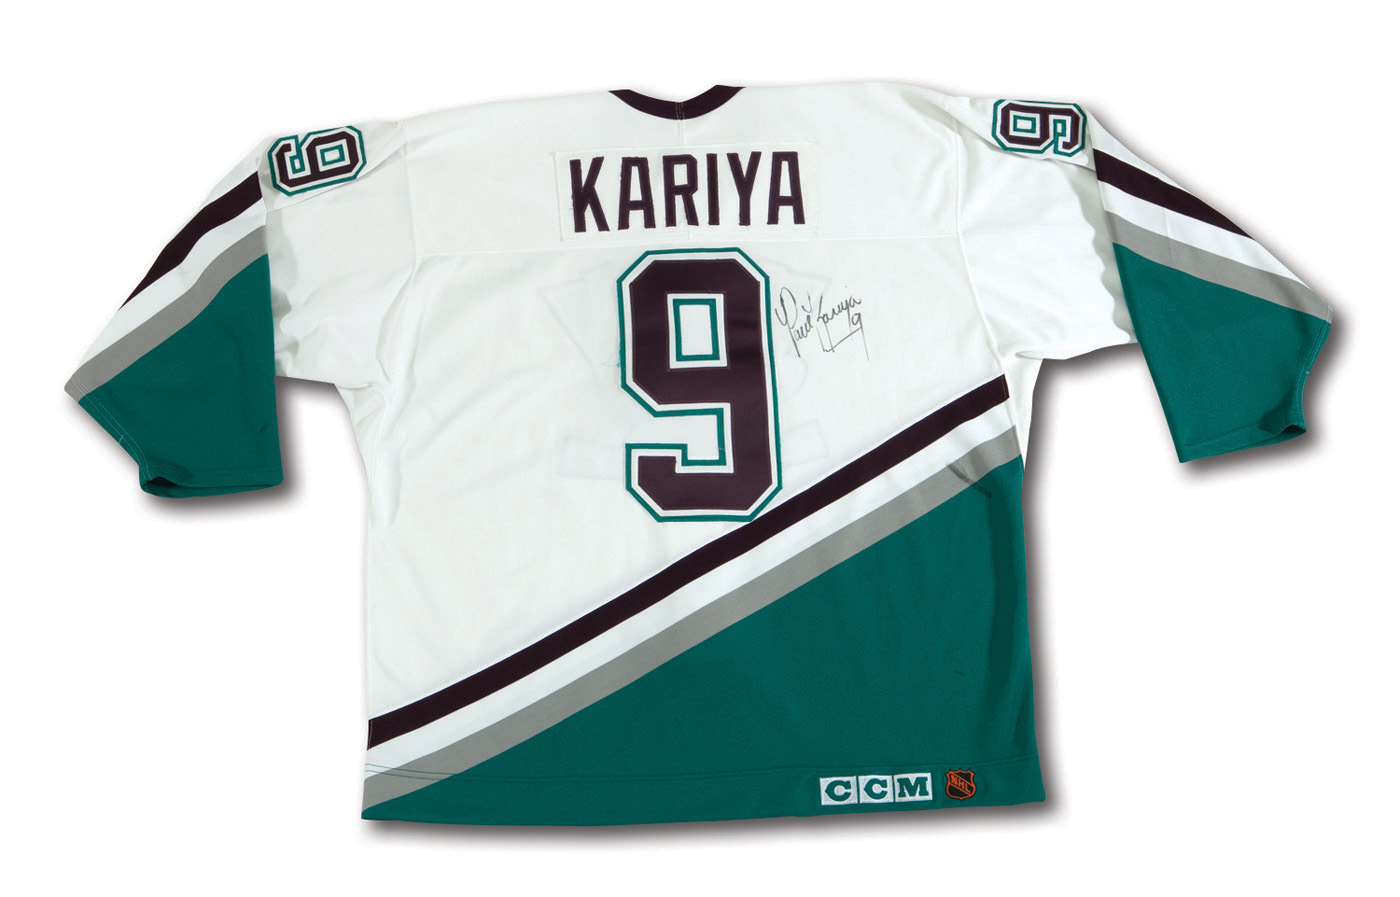 paul kariya signed jersey